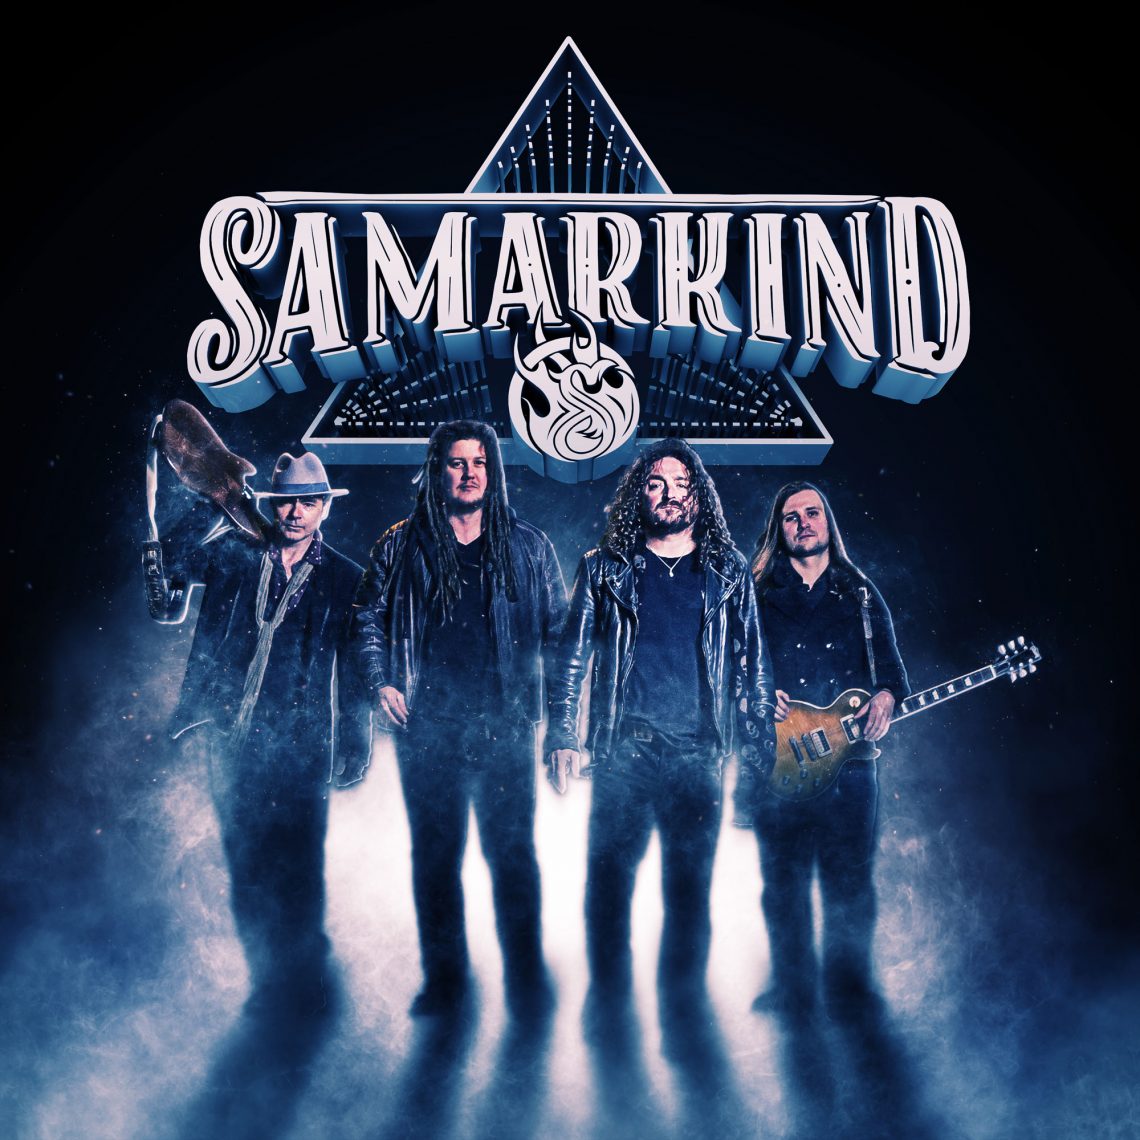 Samarkind Fire and Blood (new single)